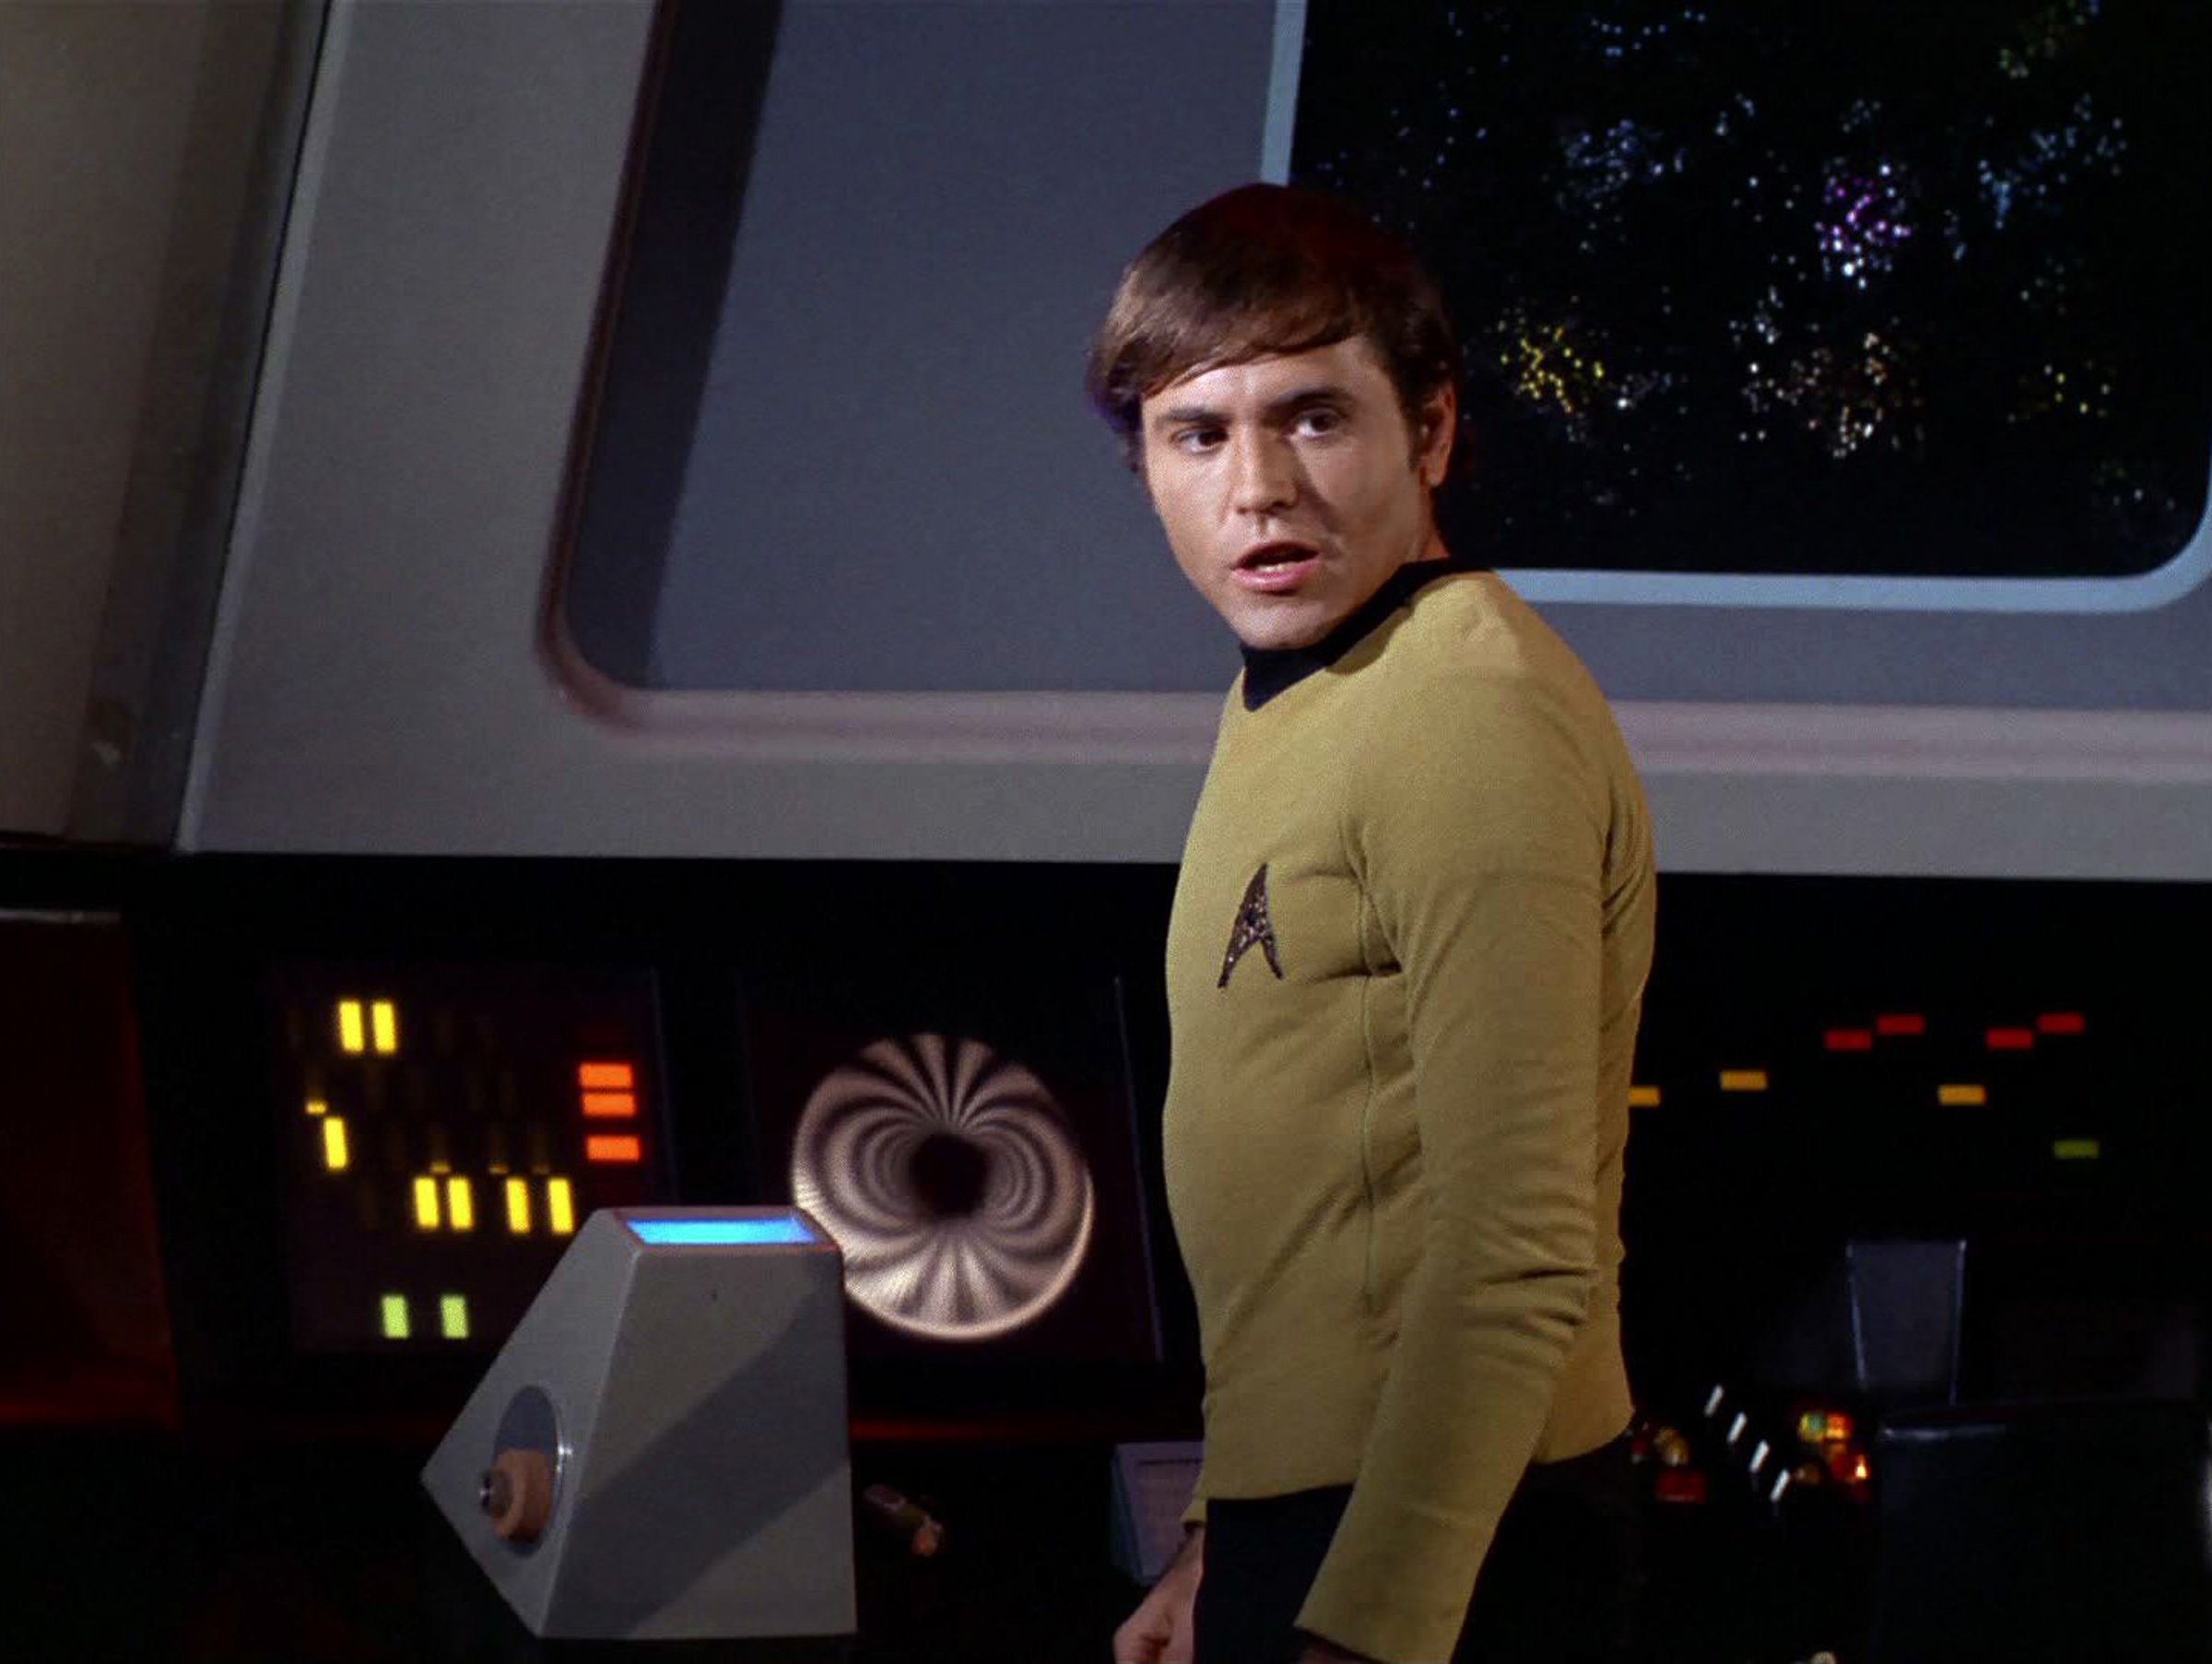 Walter Koenig as Pavel Chekov in 'Star Trek The Original Series'